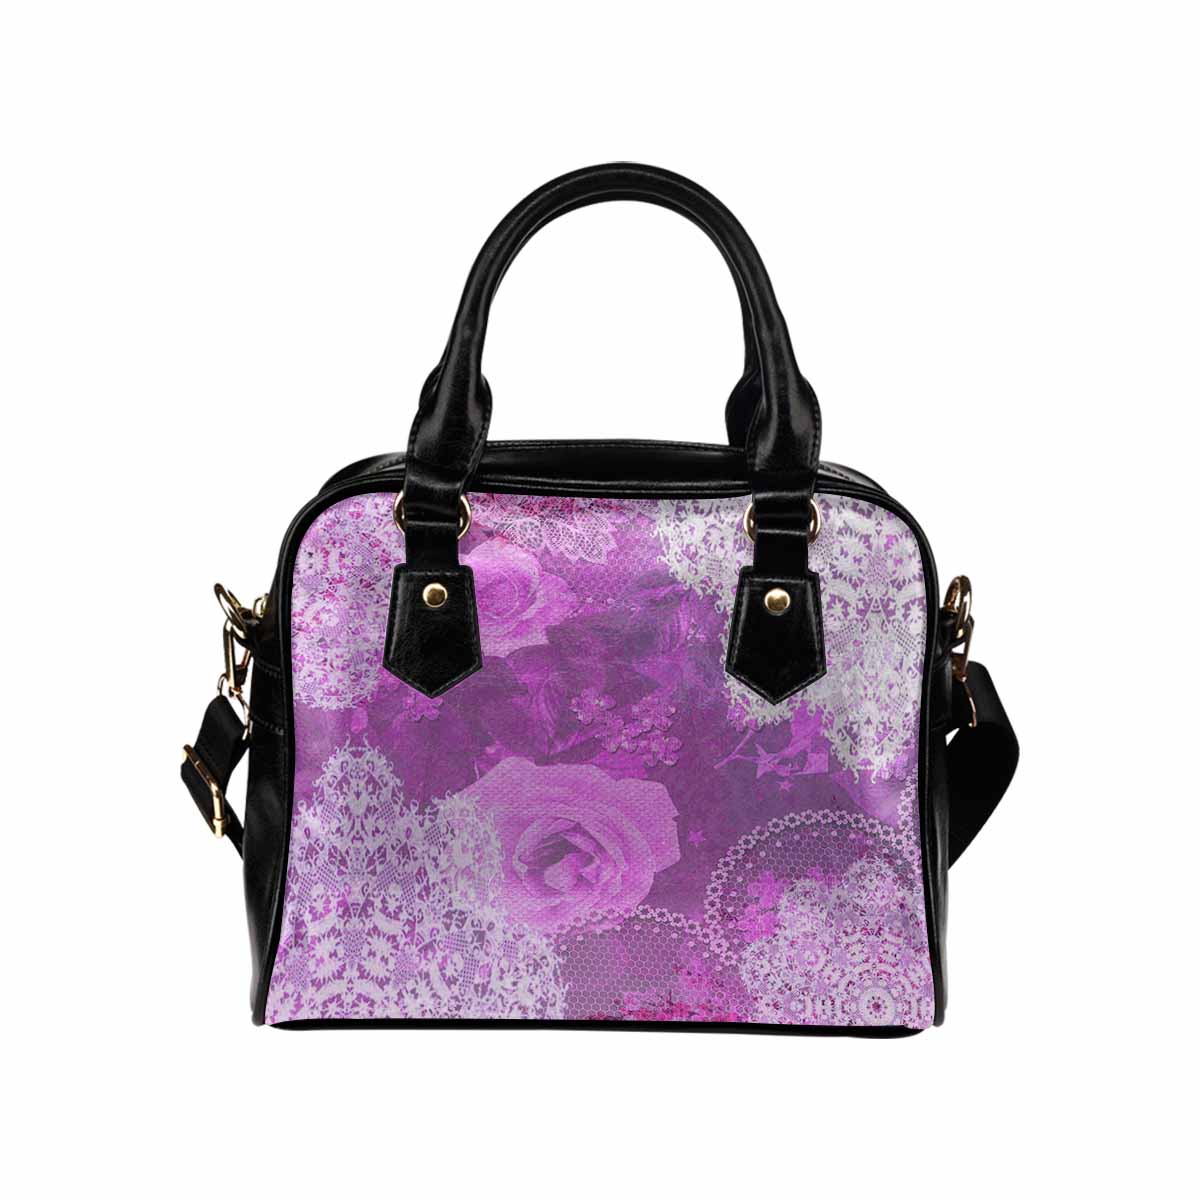 Victorian lace print, cute handbag, Mod 19163453, design 03